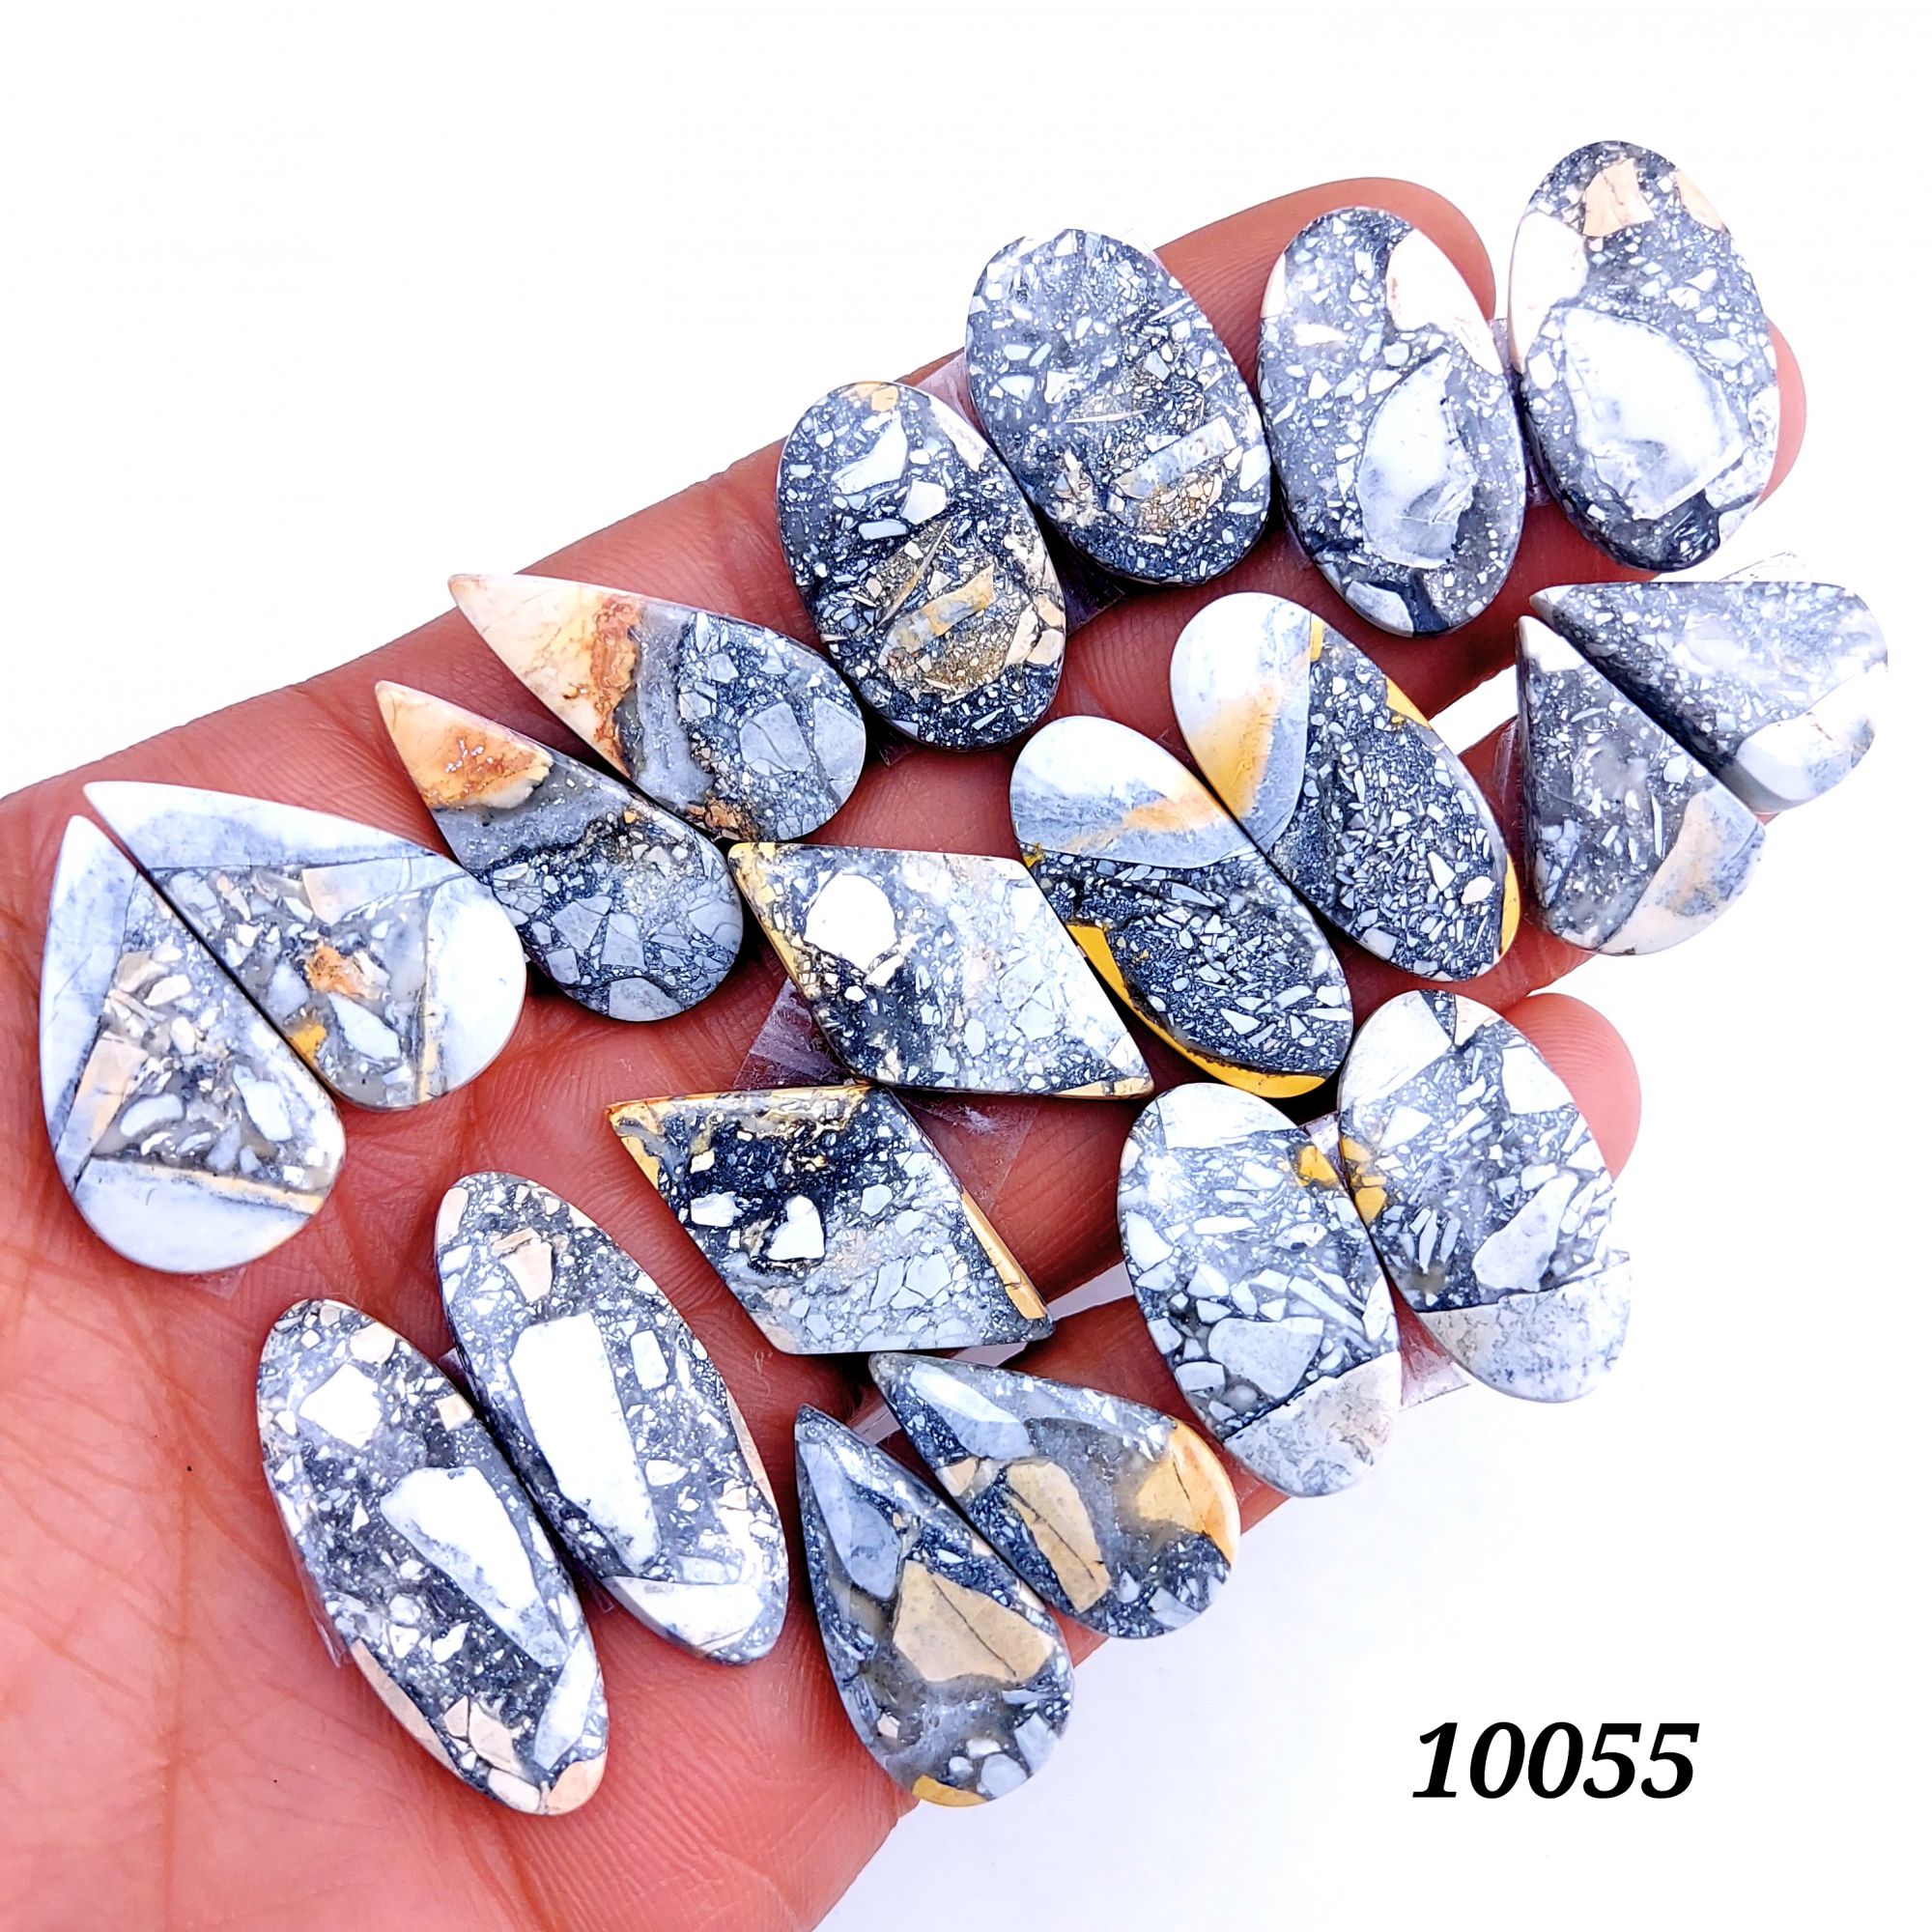 10Pcs 208Cts Natural Maligano Jasper Cabochon Pair Lot Back Side Unpolished Semi-Precious Gemstones For Jewelry Making 33x12 22x14mm #10055